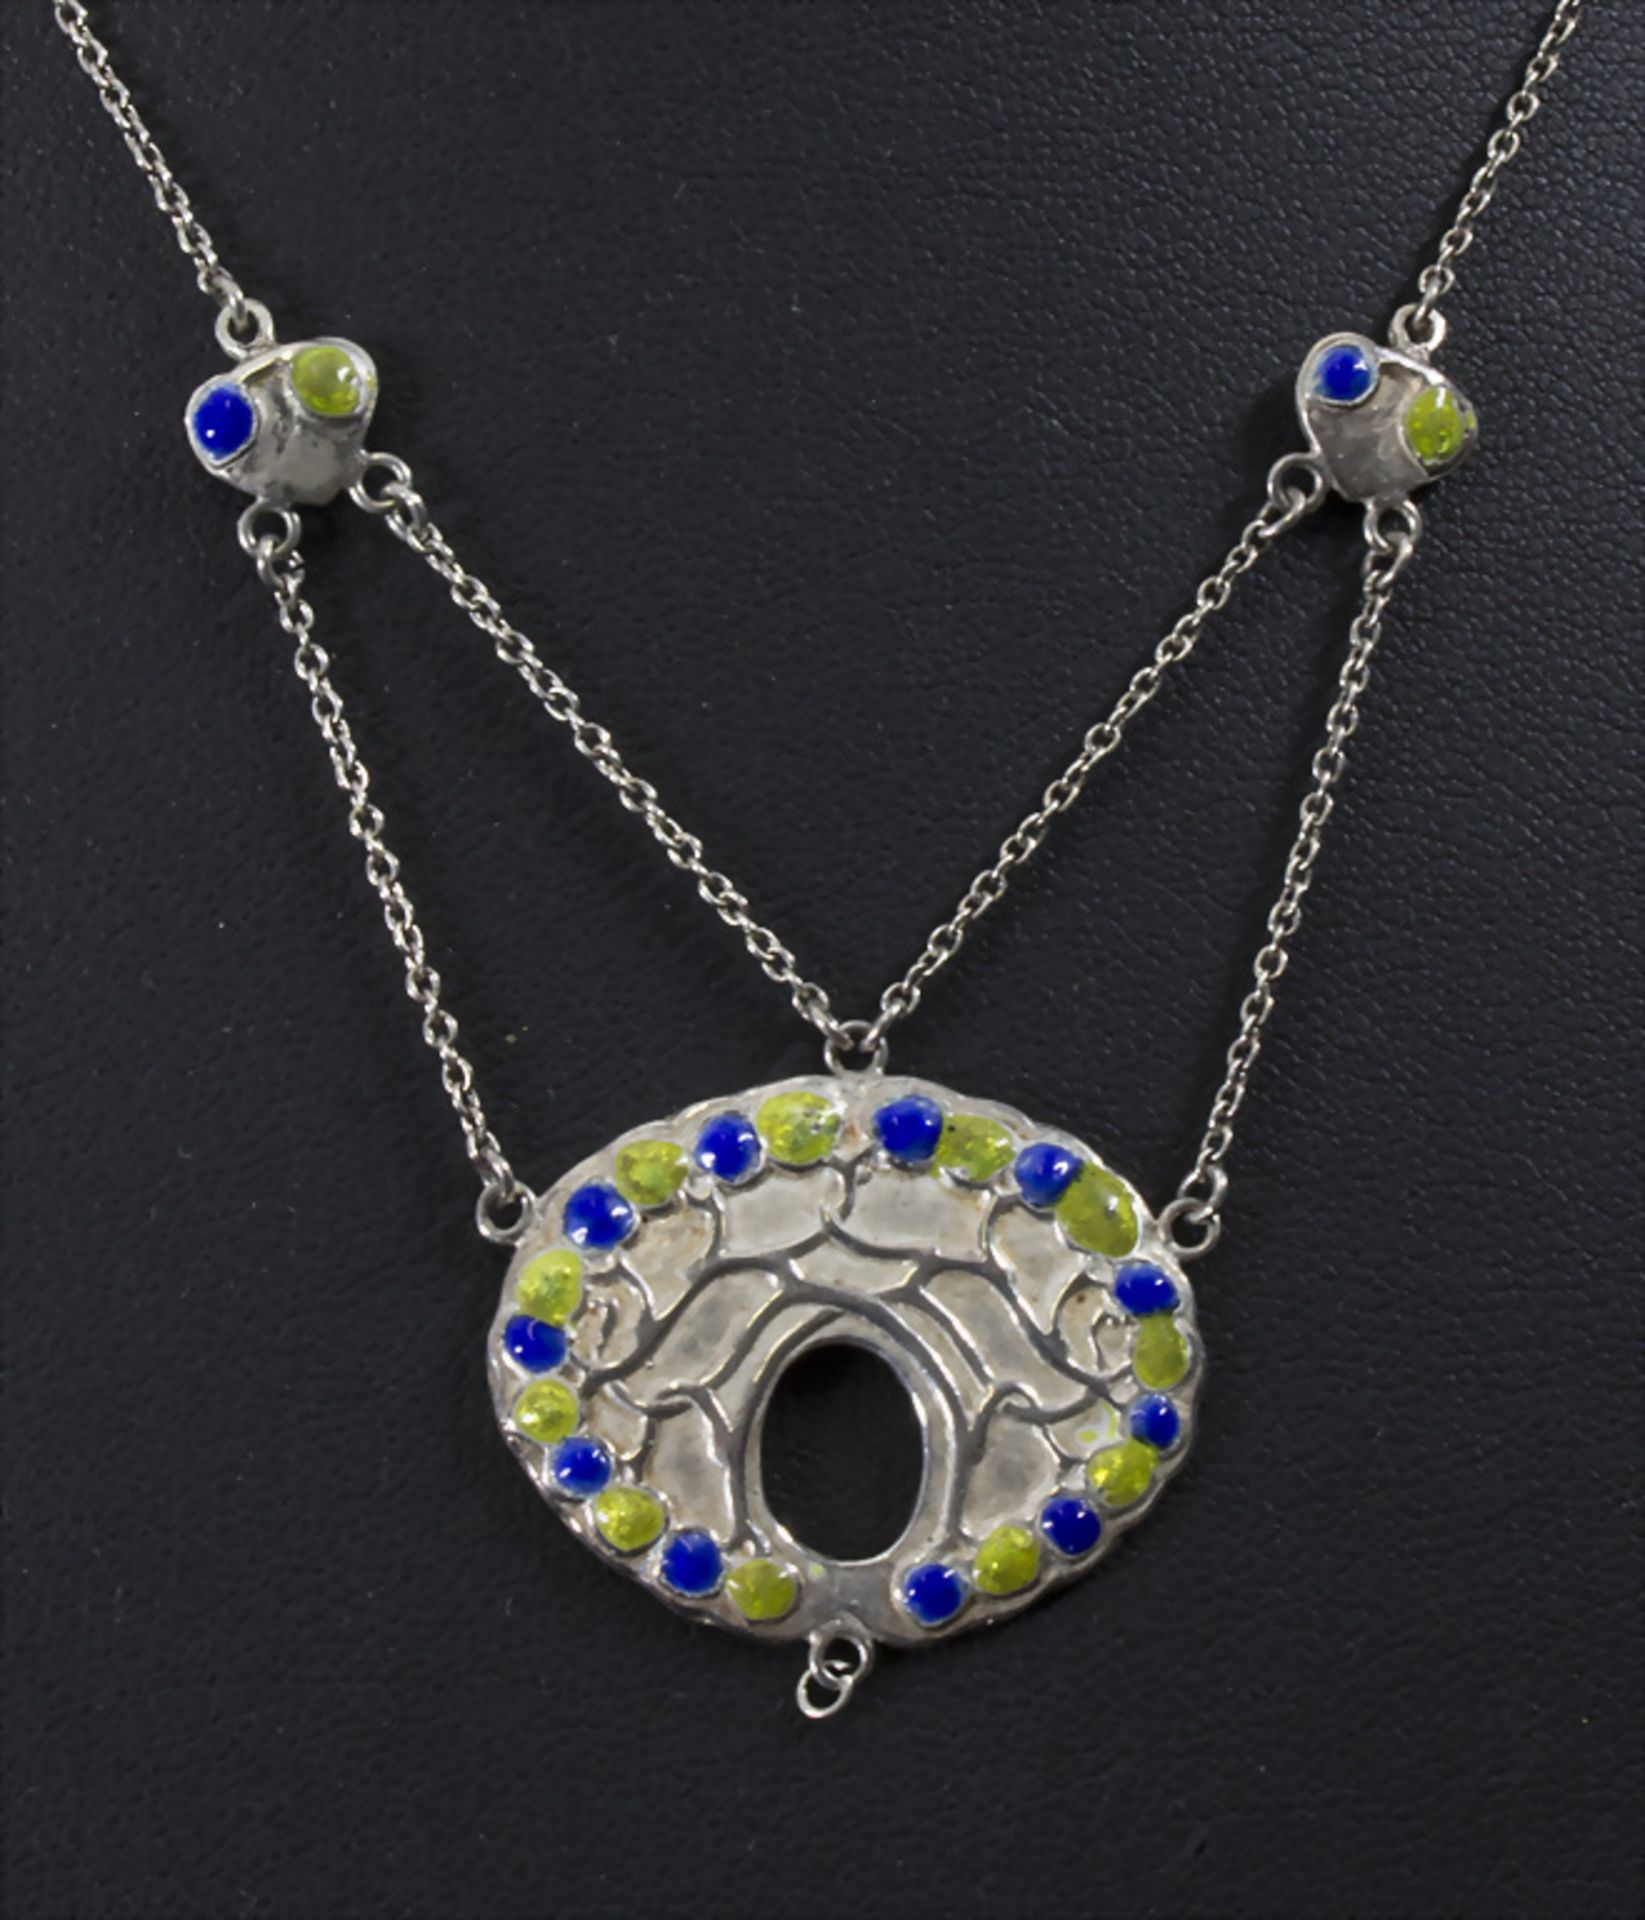 Jugendstil Silber Collier / An Art Nouveau silver necklace